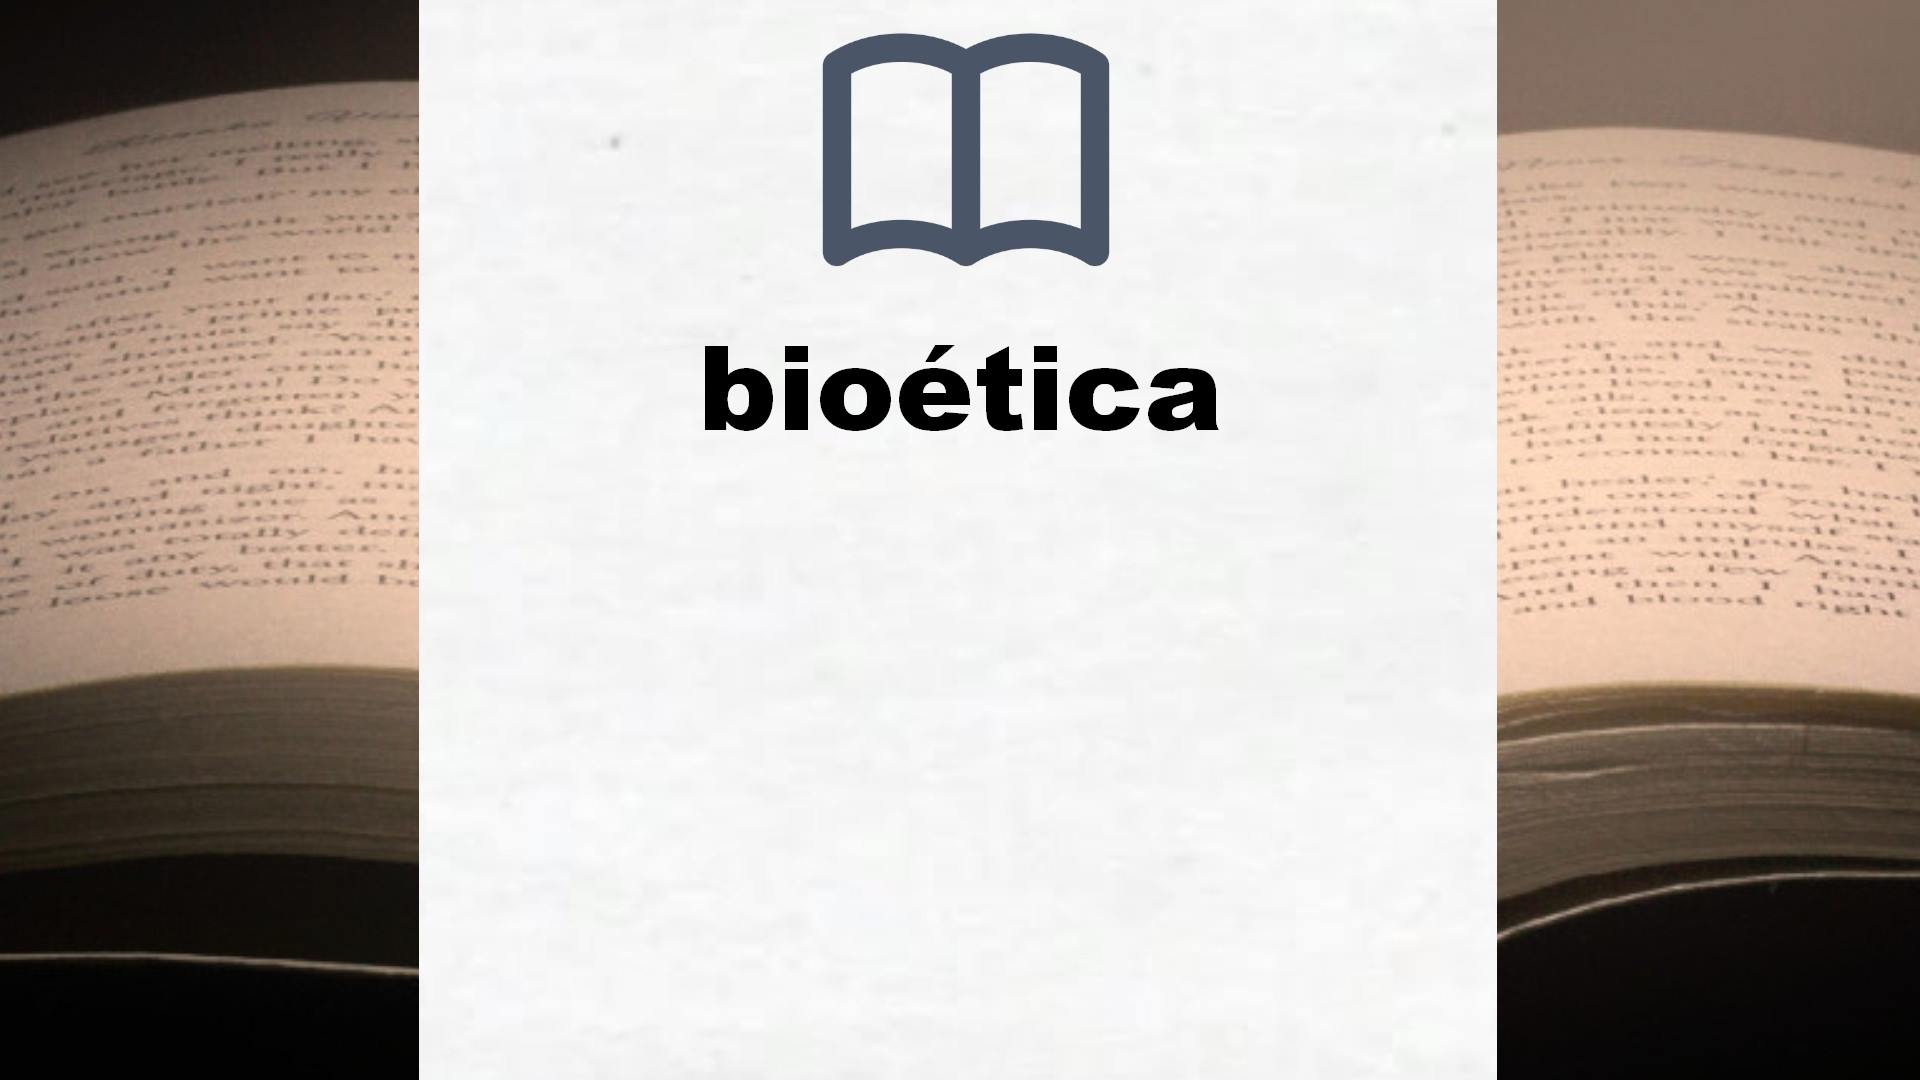 Libros sobre bioética